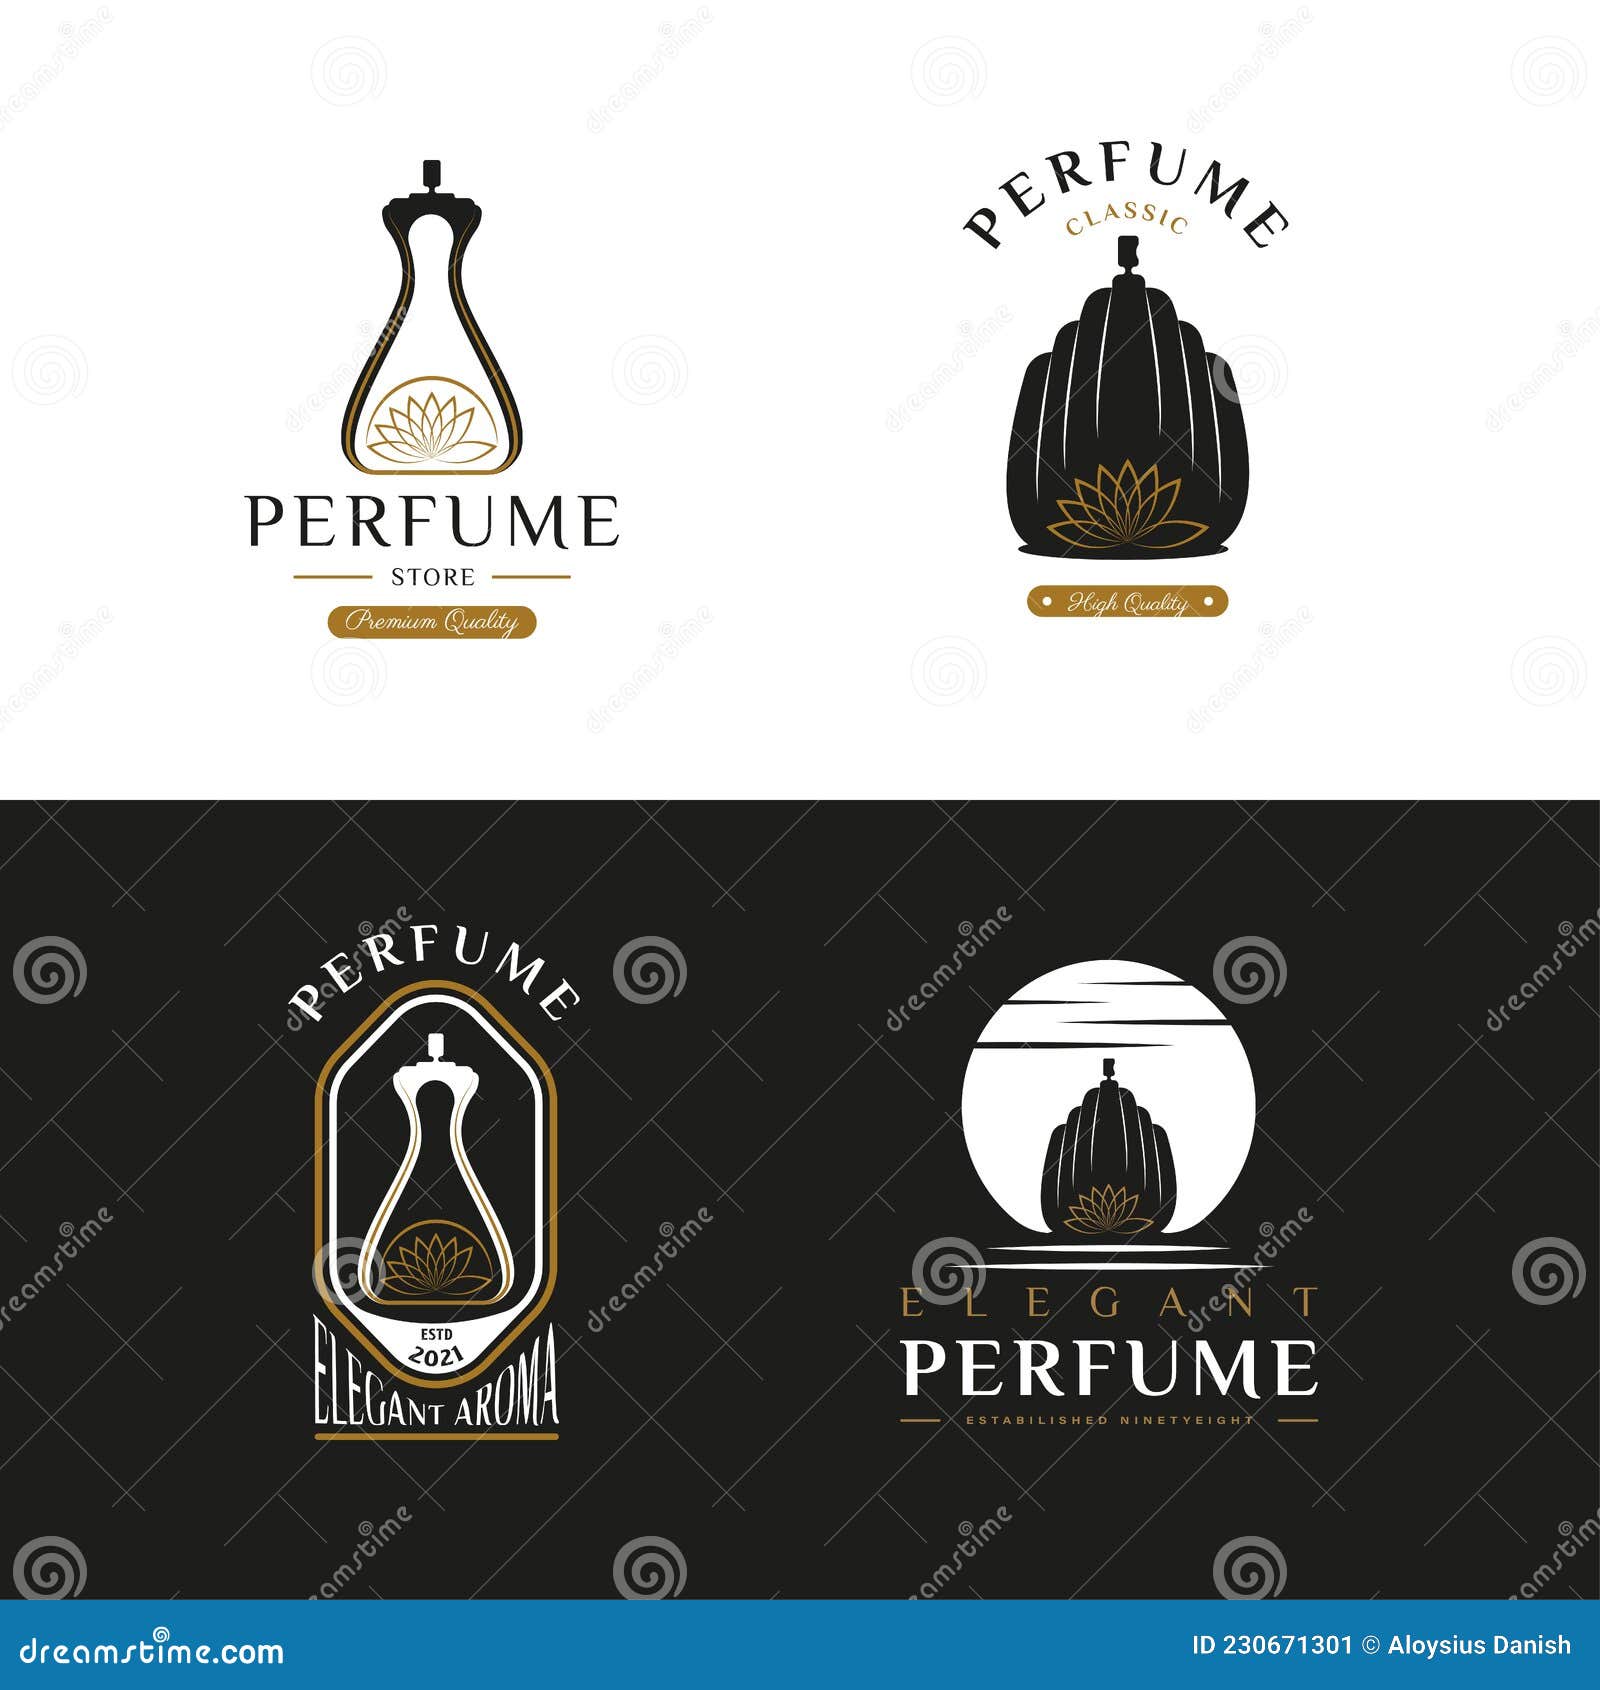 Luxury Perfume Vector Logo Design Graphic by Artsy Studio